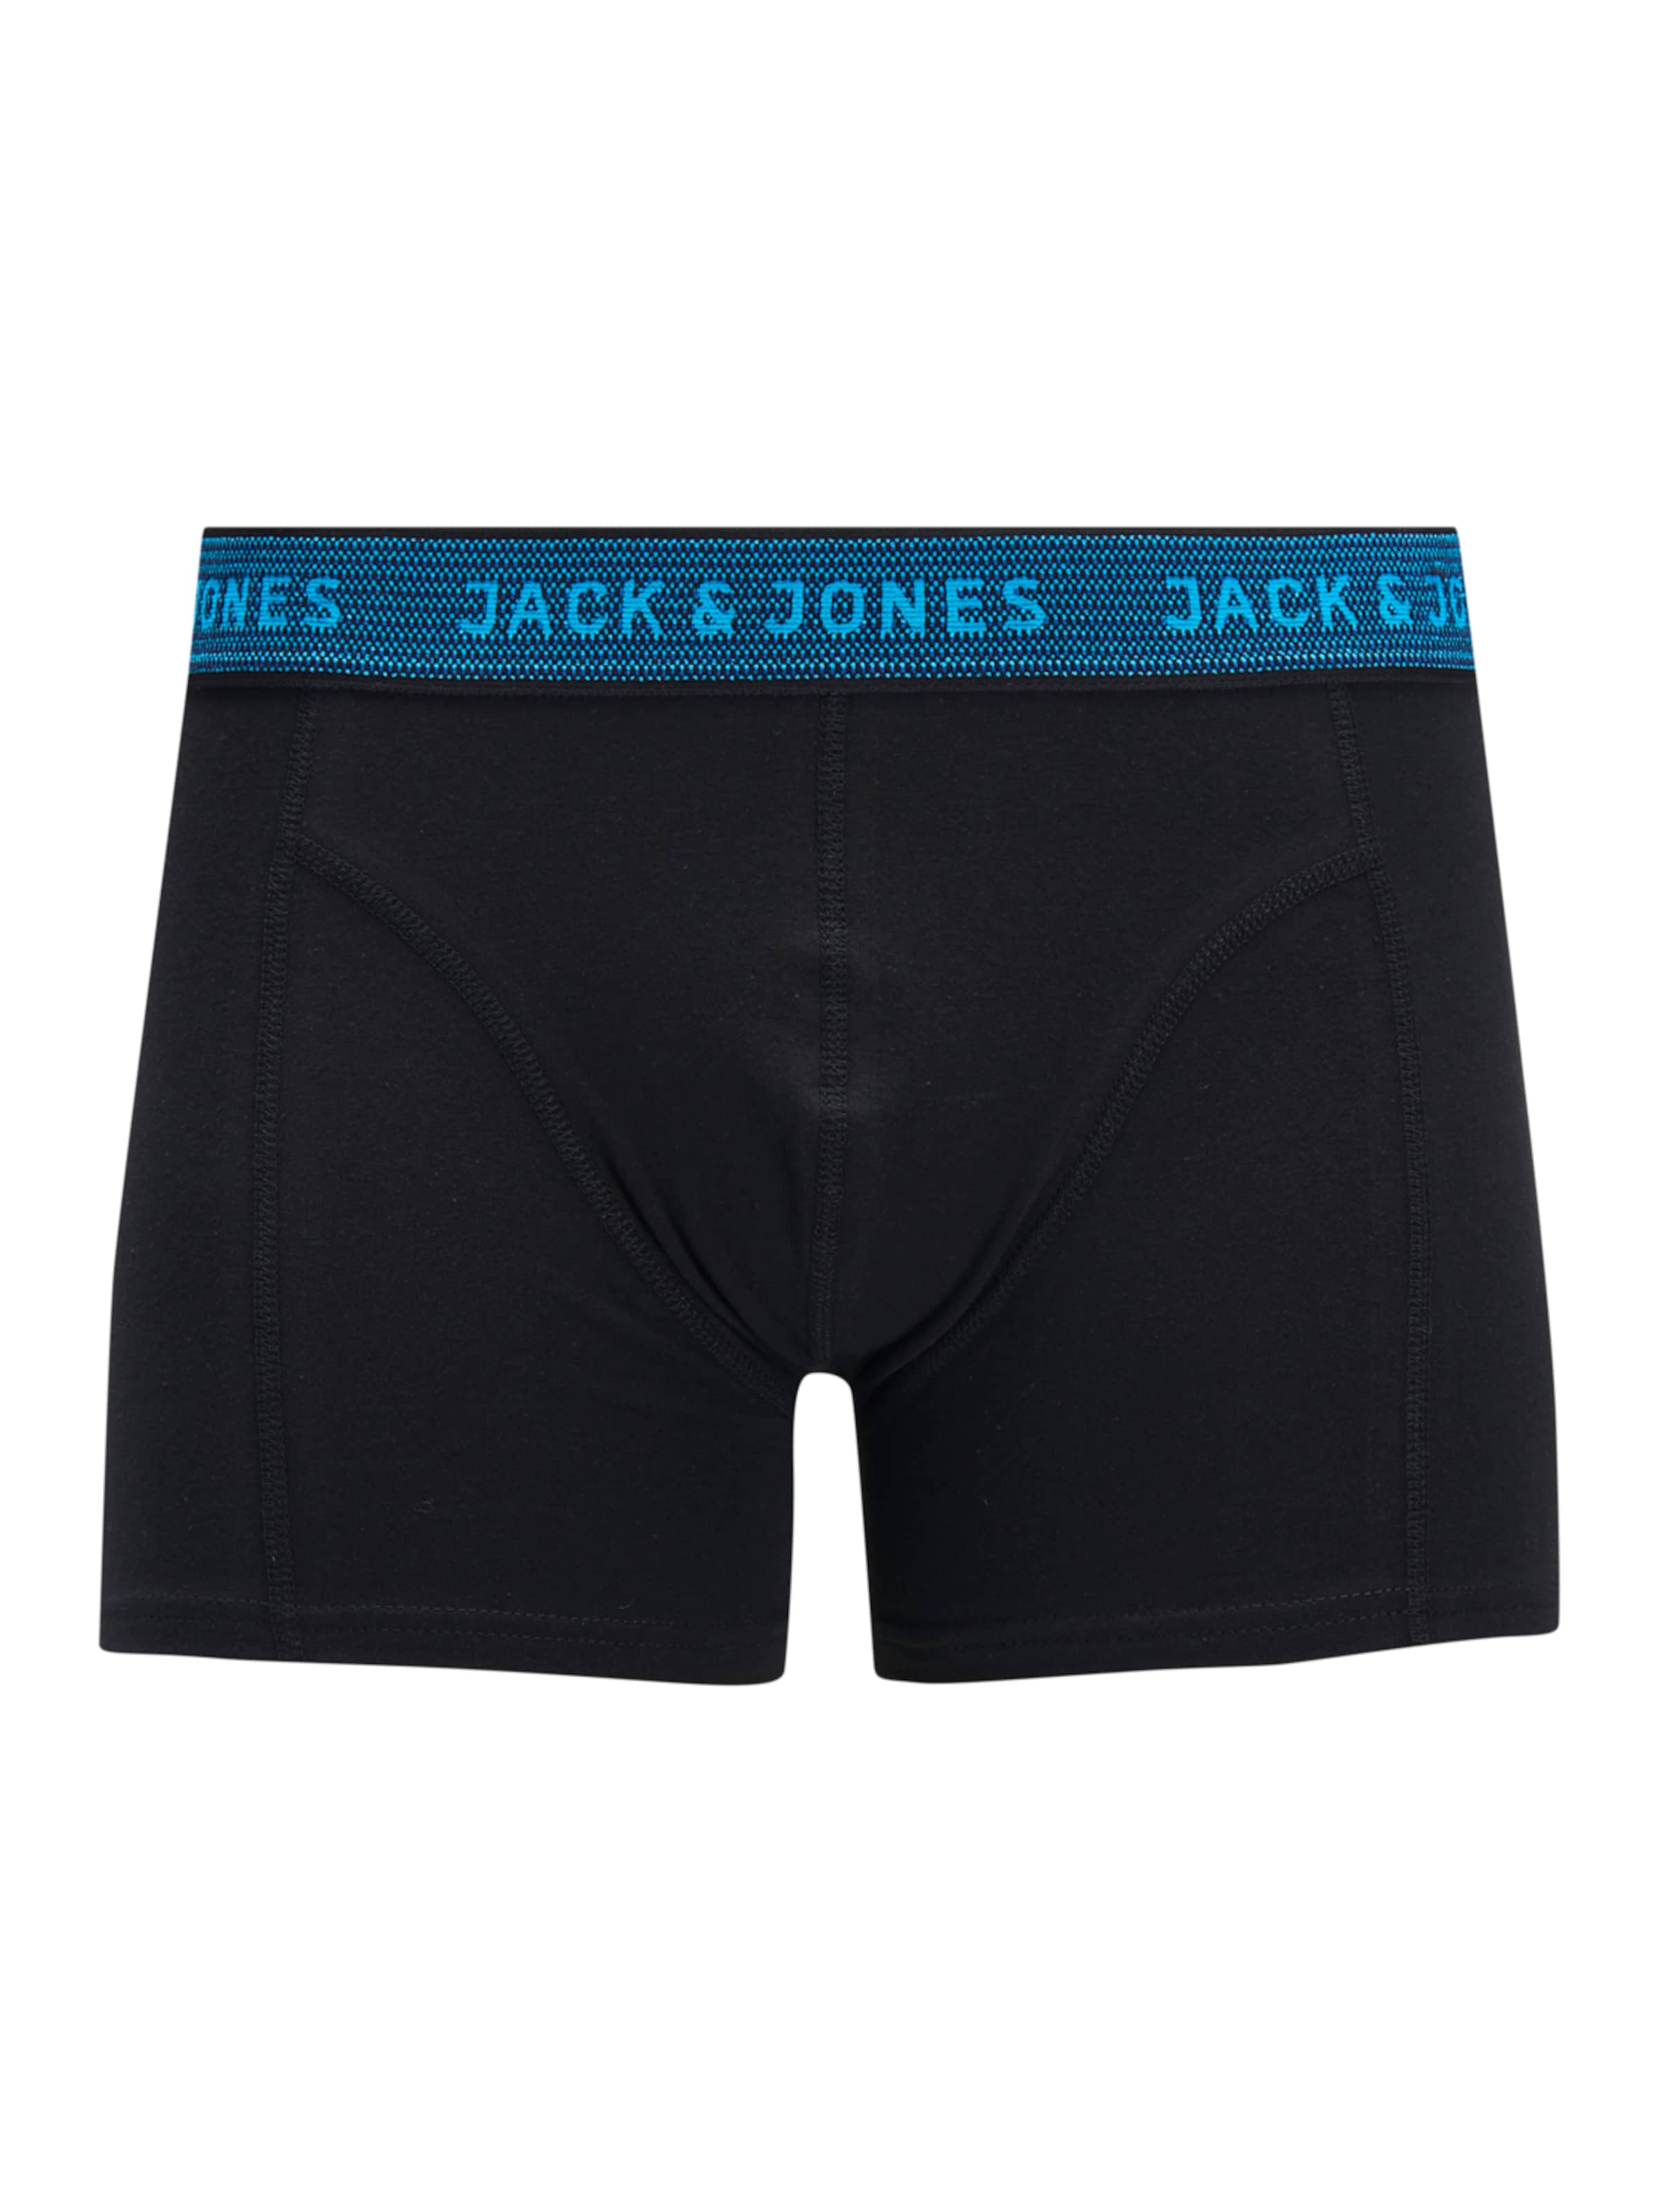 Jack & Jones Boxers XL Noir